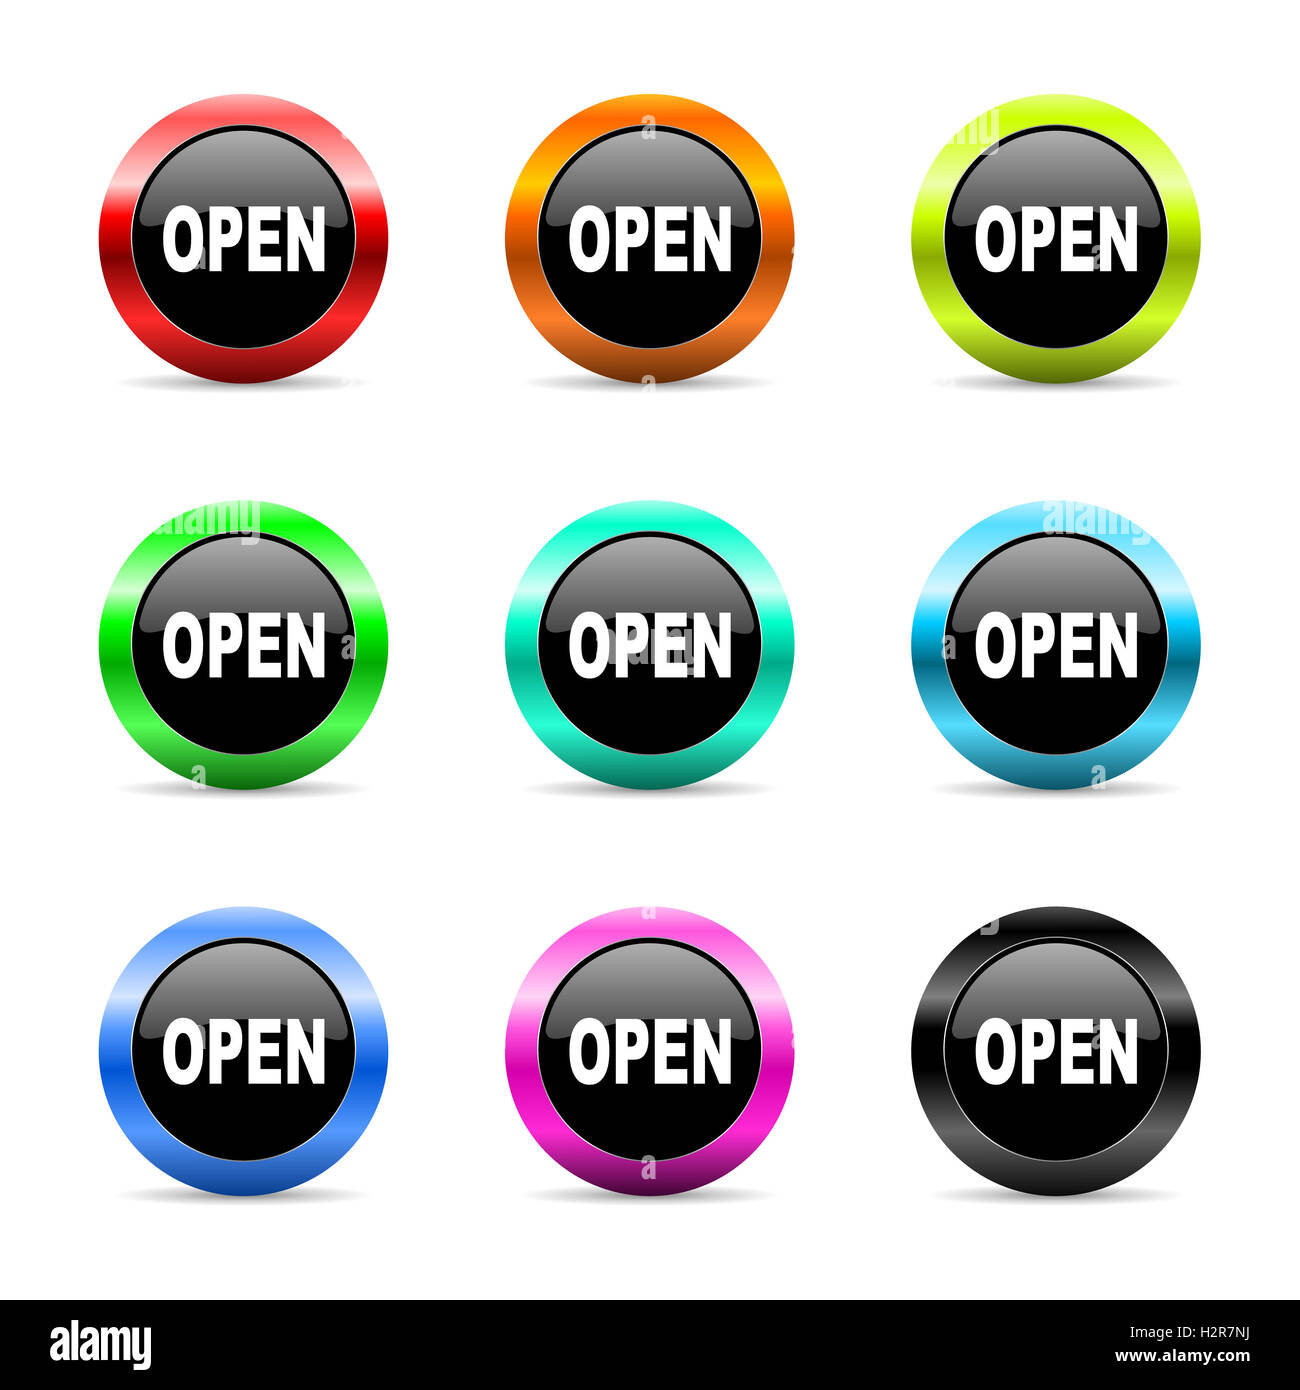 open web icons set Stock Photo